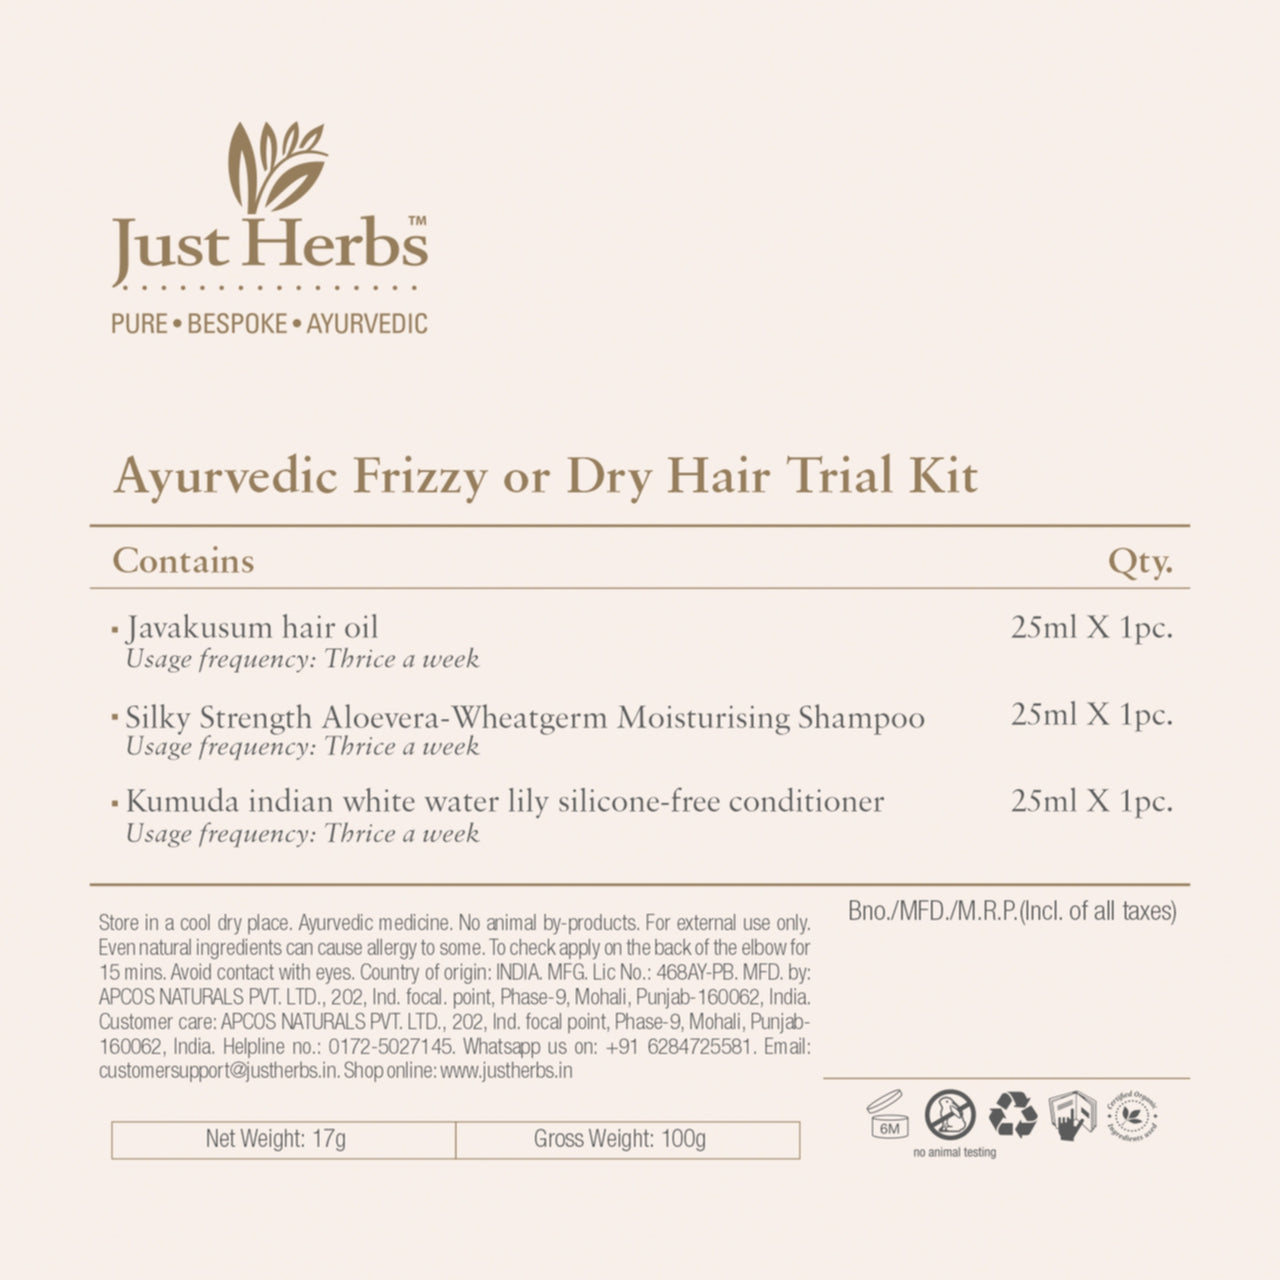 Ayurvedic Frizzy or Dry Hair Trial Kit